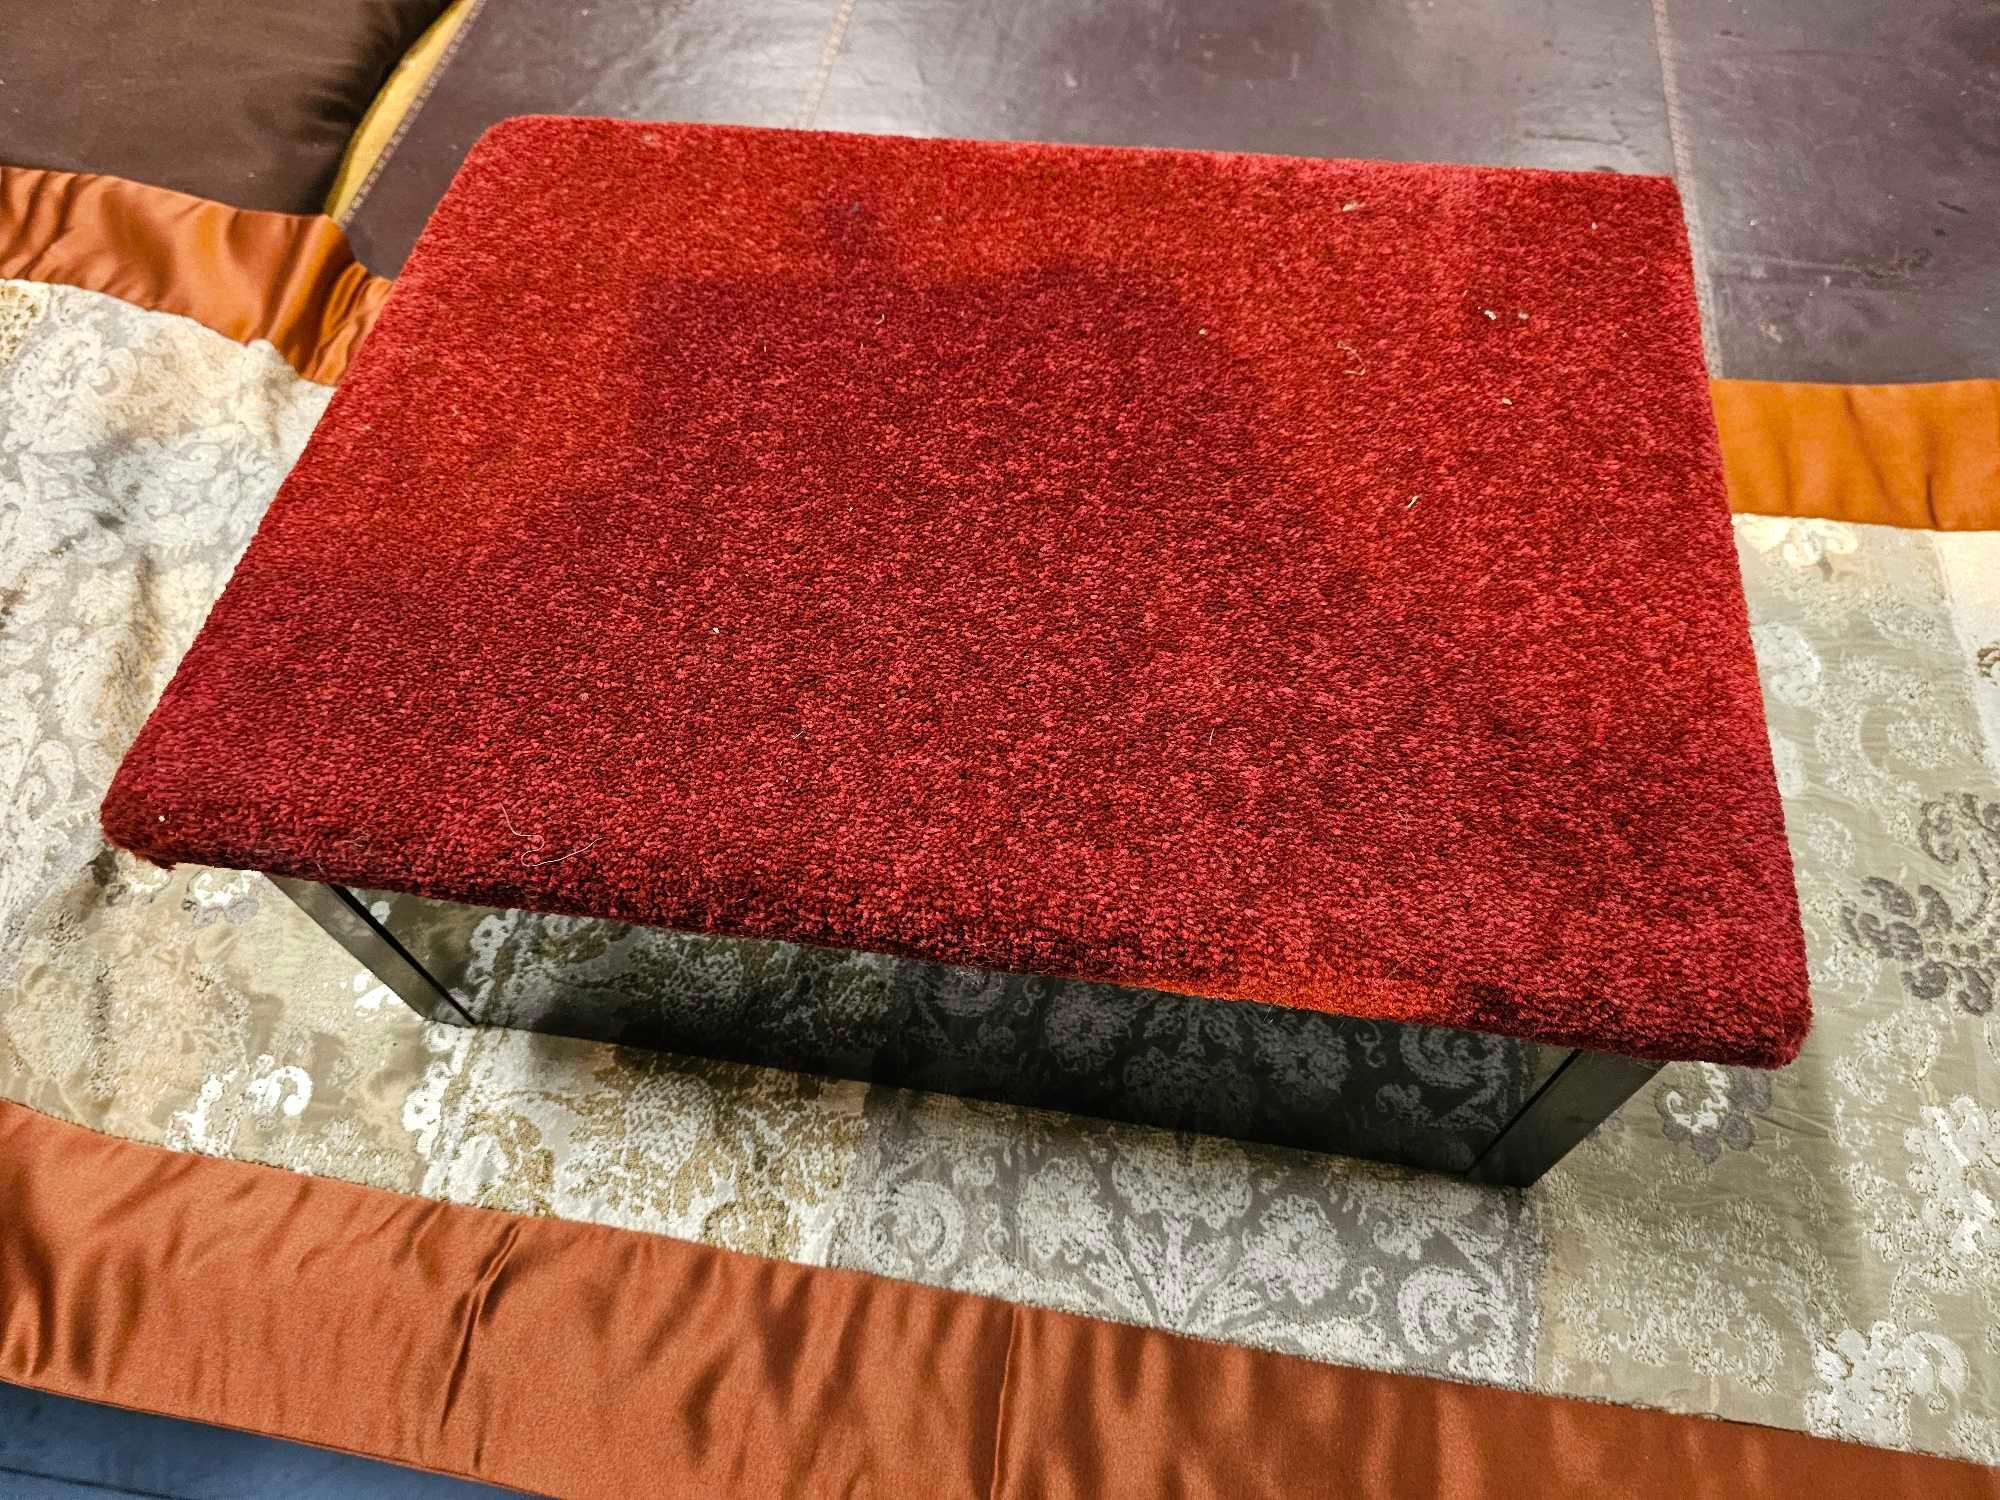 Foot Stool Black Base Red Carpet Top53 x 38 x 23 - Image 2 of 3